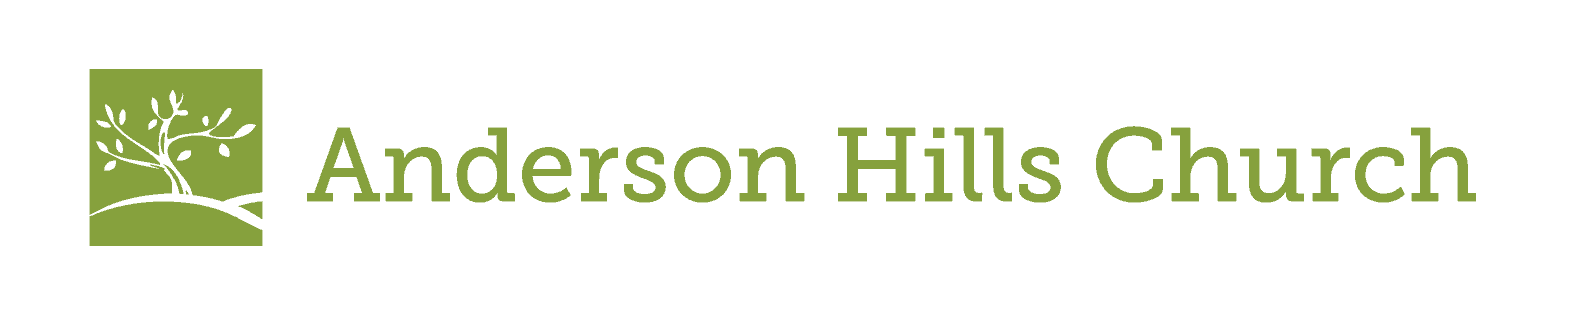 Anderson Hills Church logo